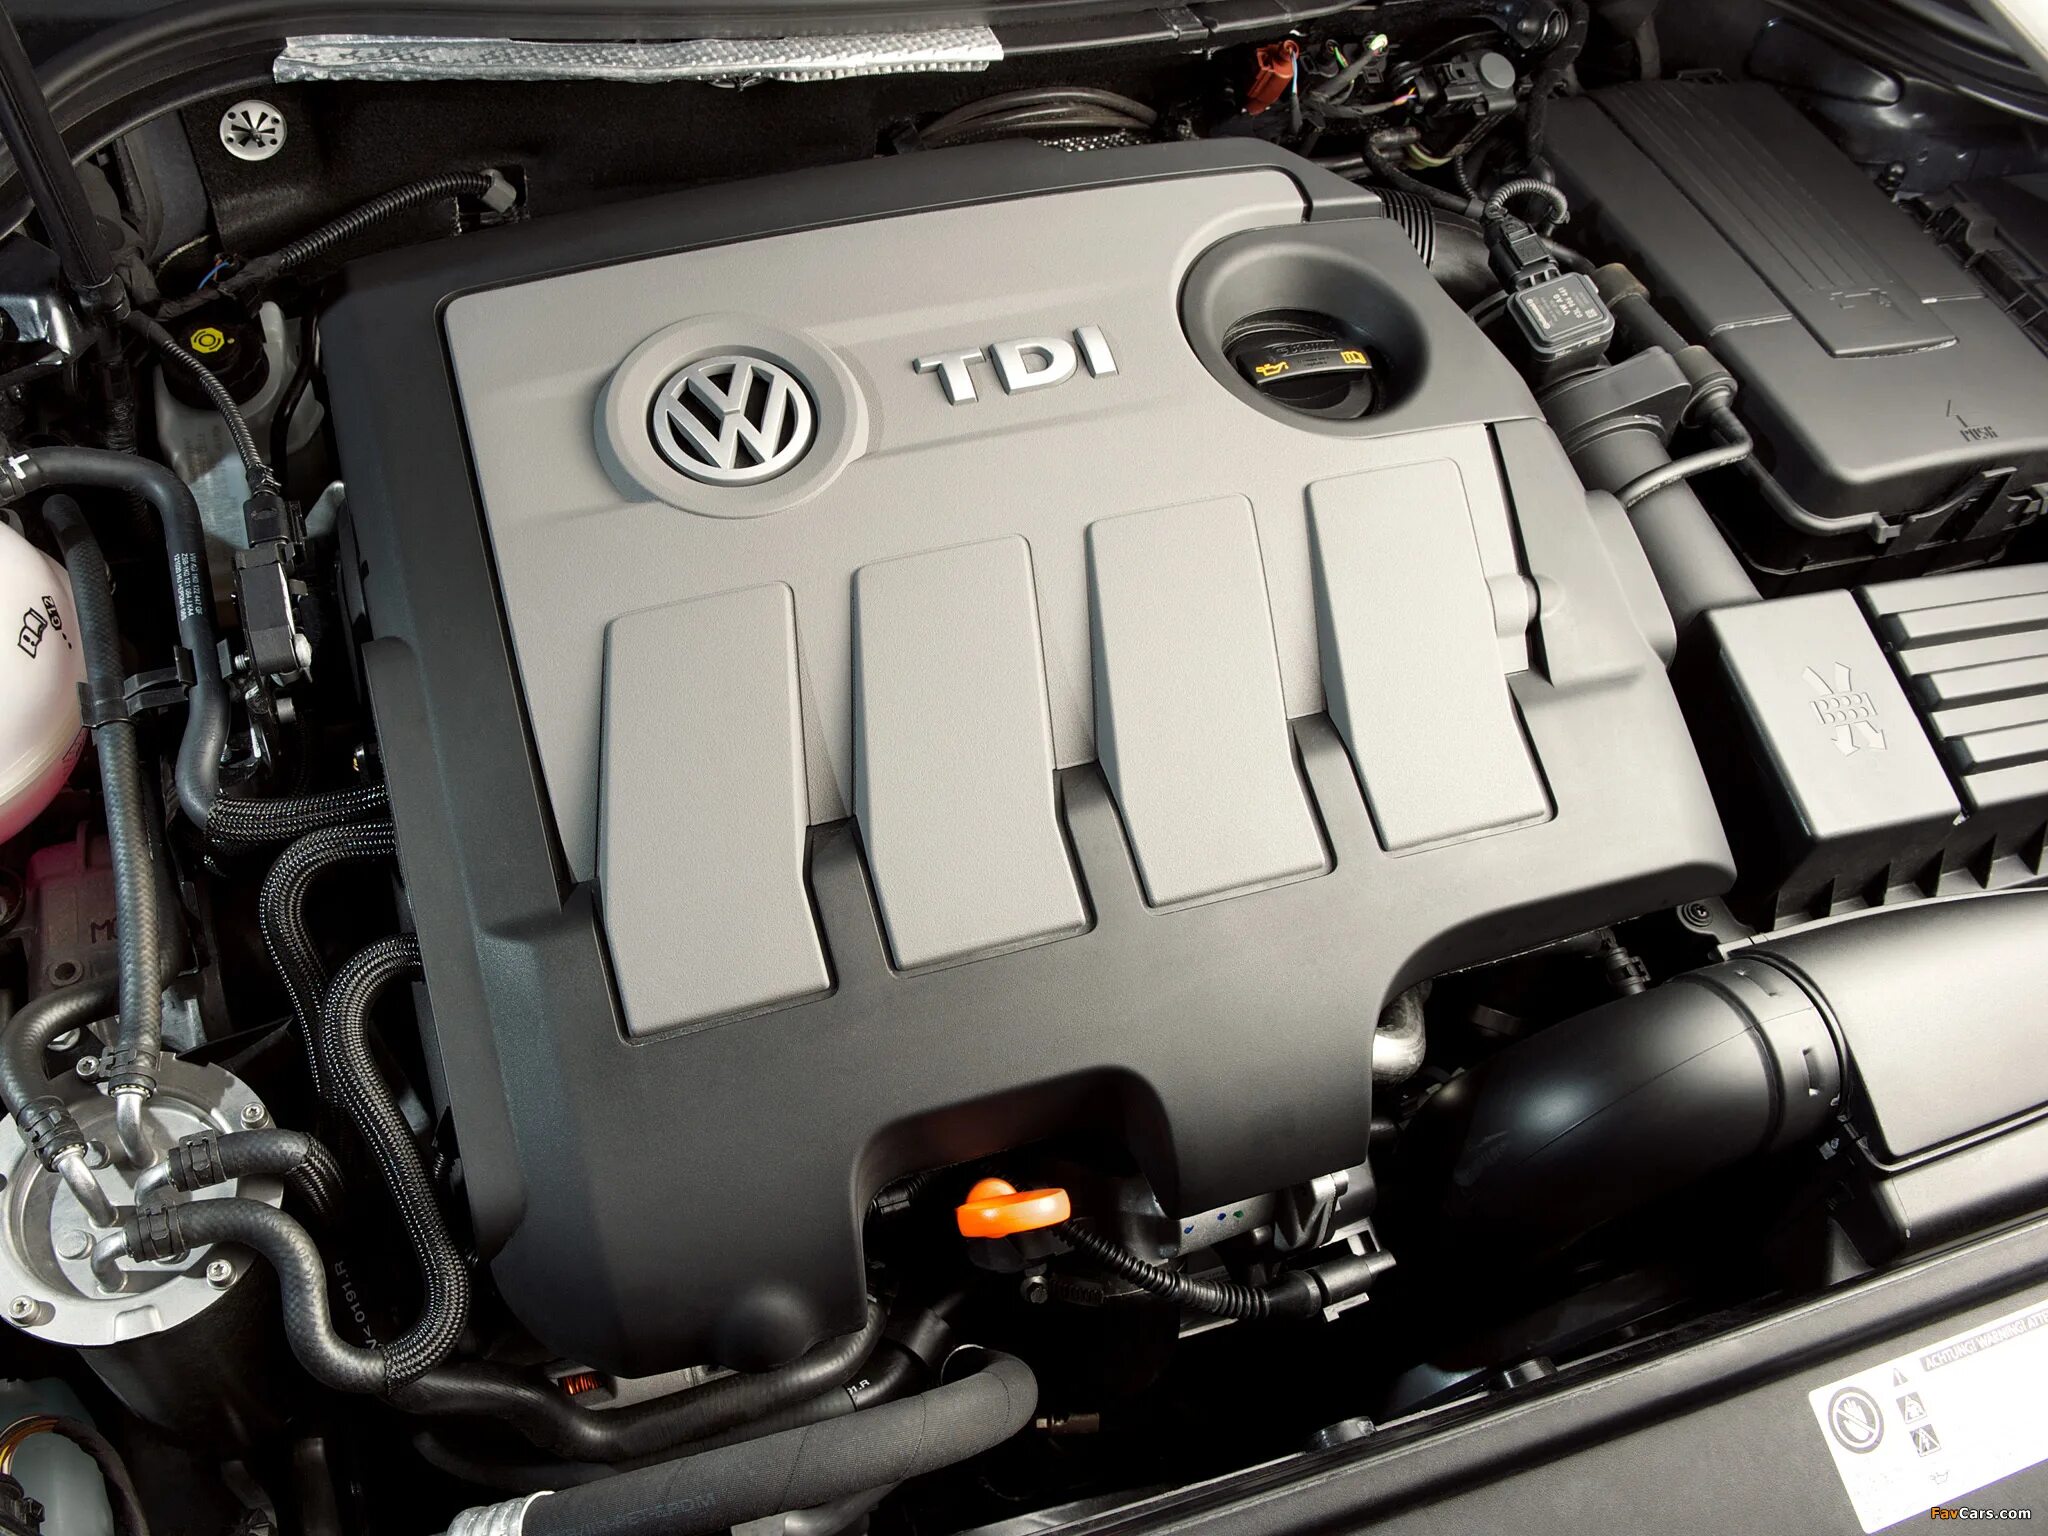 Vw b6 2.0. Volkswagen Passat b6 2.0 TDI моторы. Двигатель Пассат б6 2.0. Двигатель Volkswagen Passat b6 дизель 2.0. Двигатель Фольксваген Пассат б6 2.0 FSI.